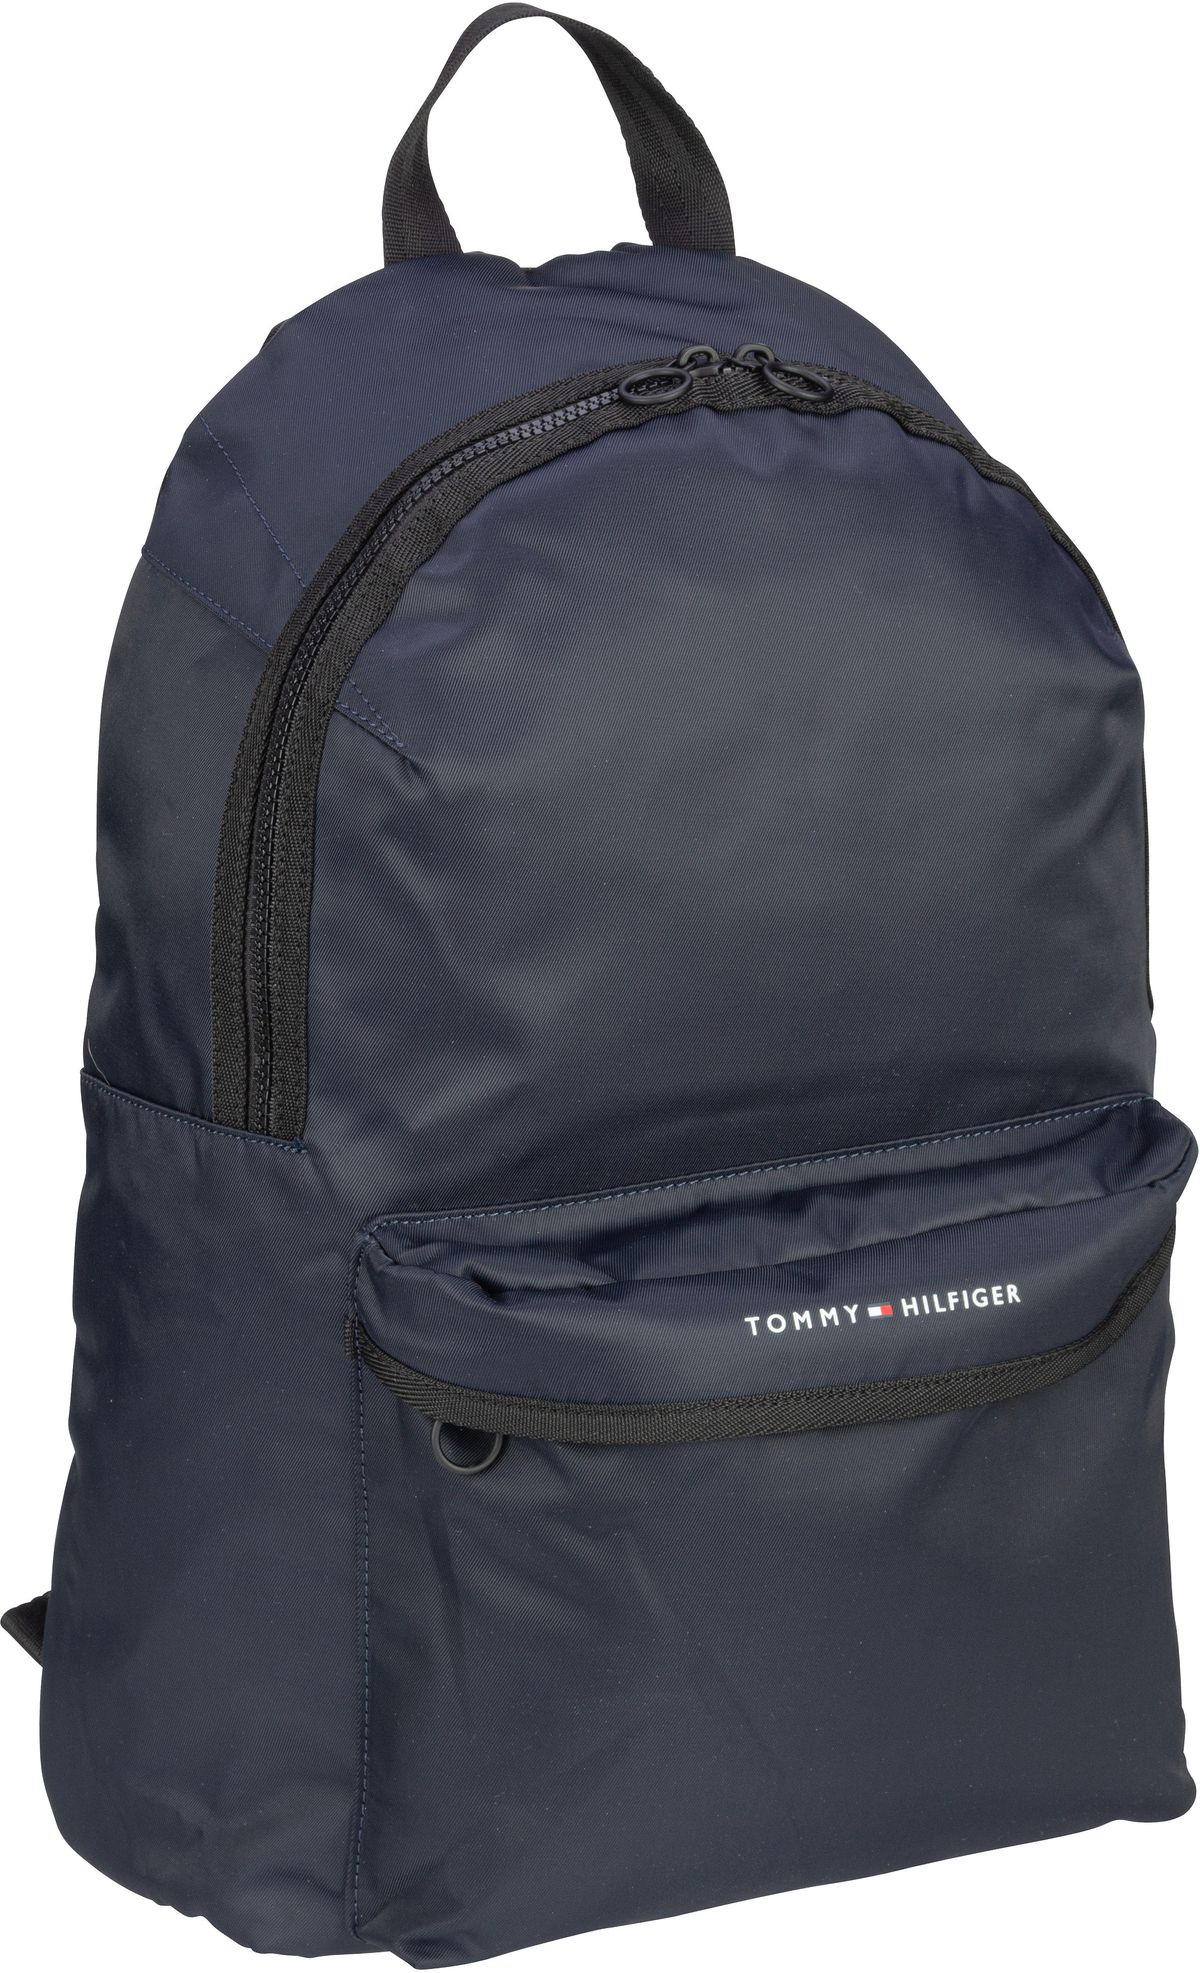 Tommy Hilfiger TH Skyline Backpack SP23 - Space Blue